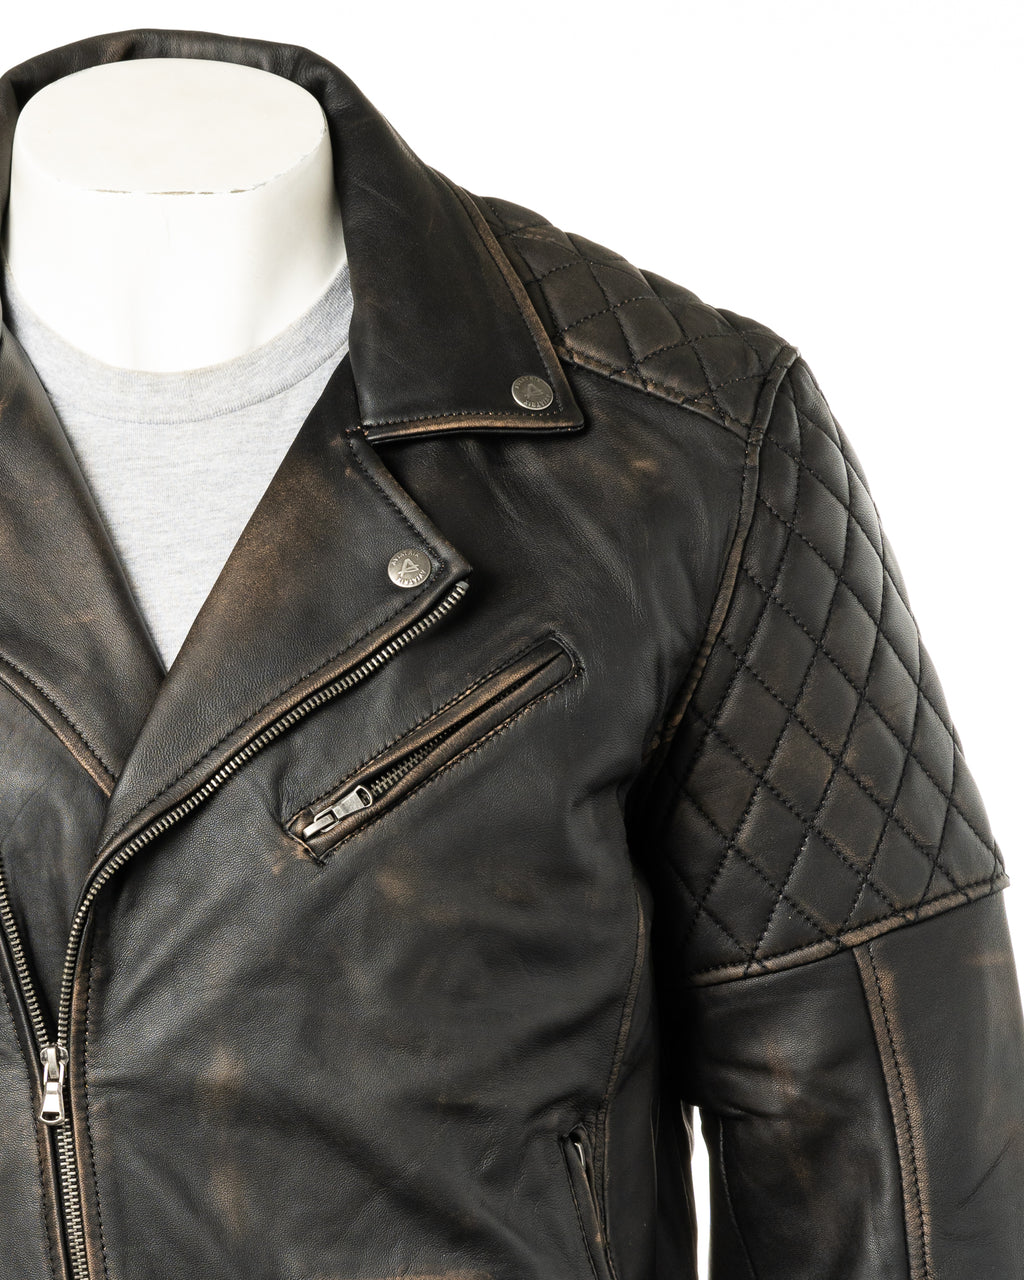 Men's Antique Black Vintage Look Biker Style Leather Jacket: Gaetano